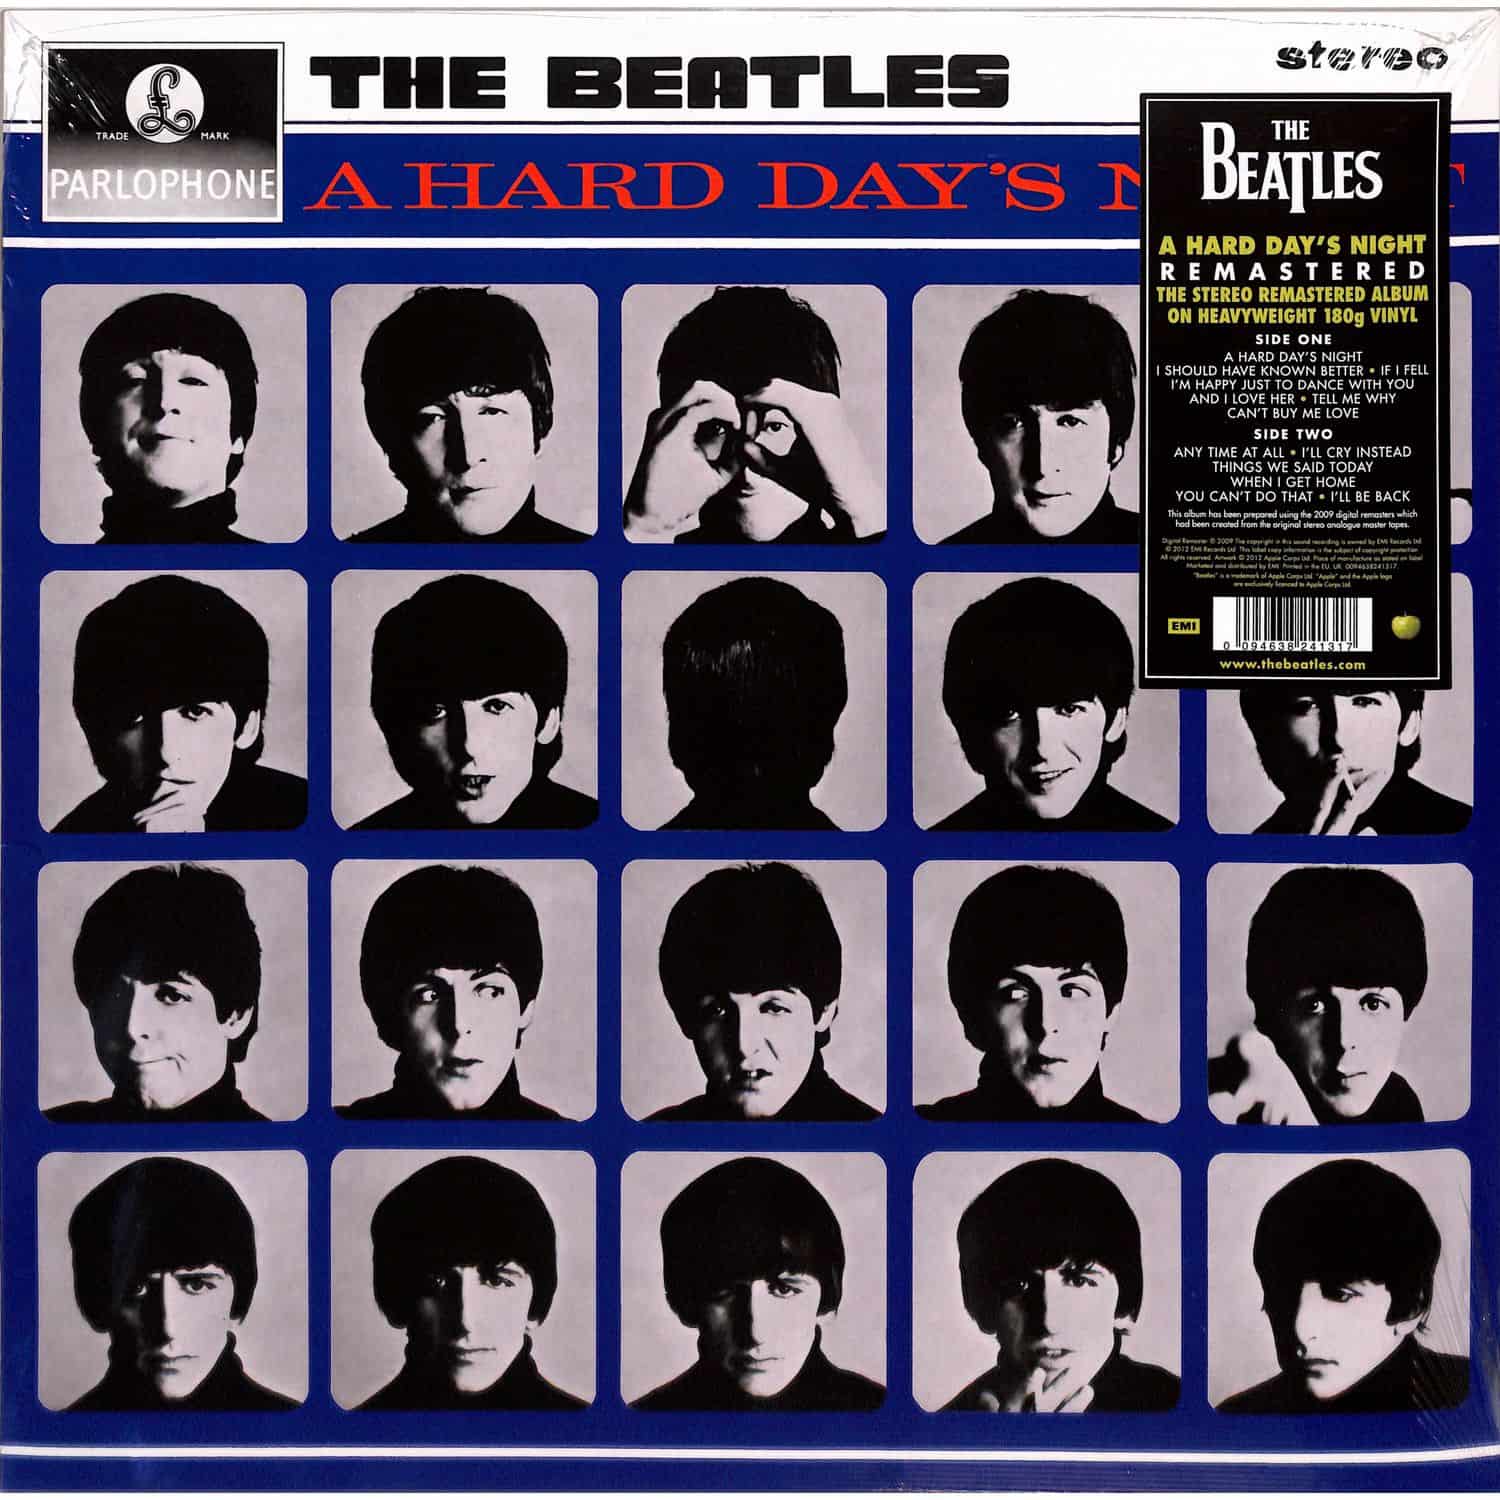 The Beatles - A HARD DAYS NIGHT 